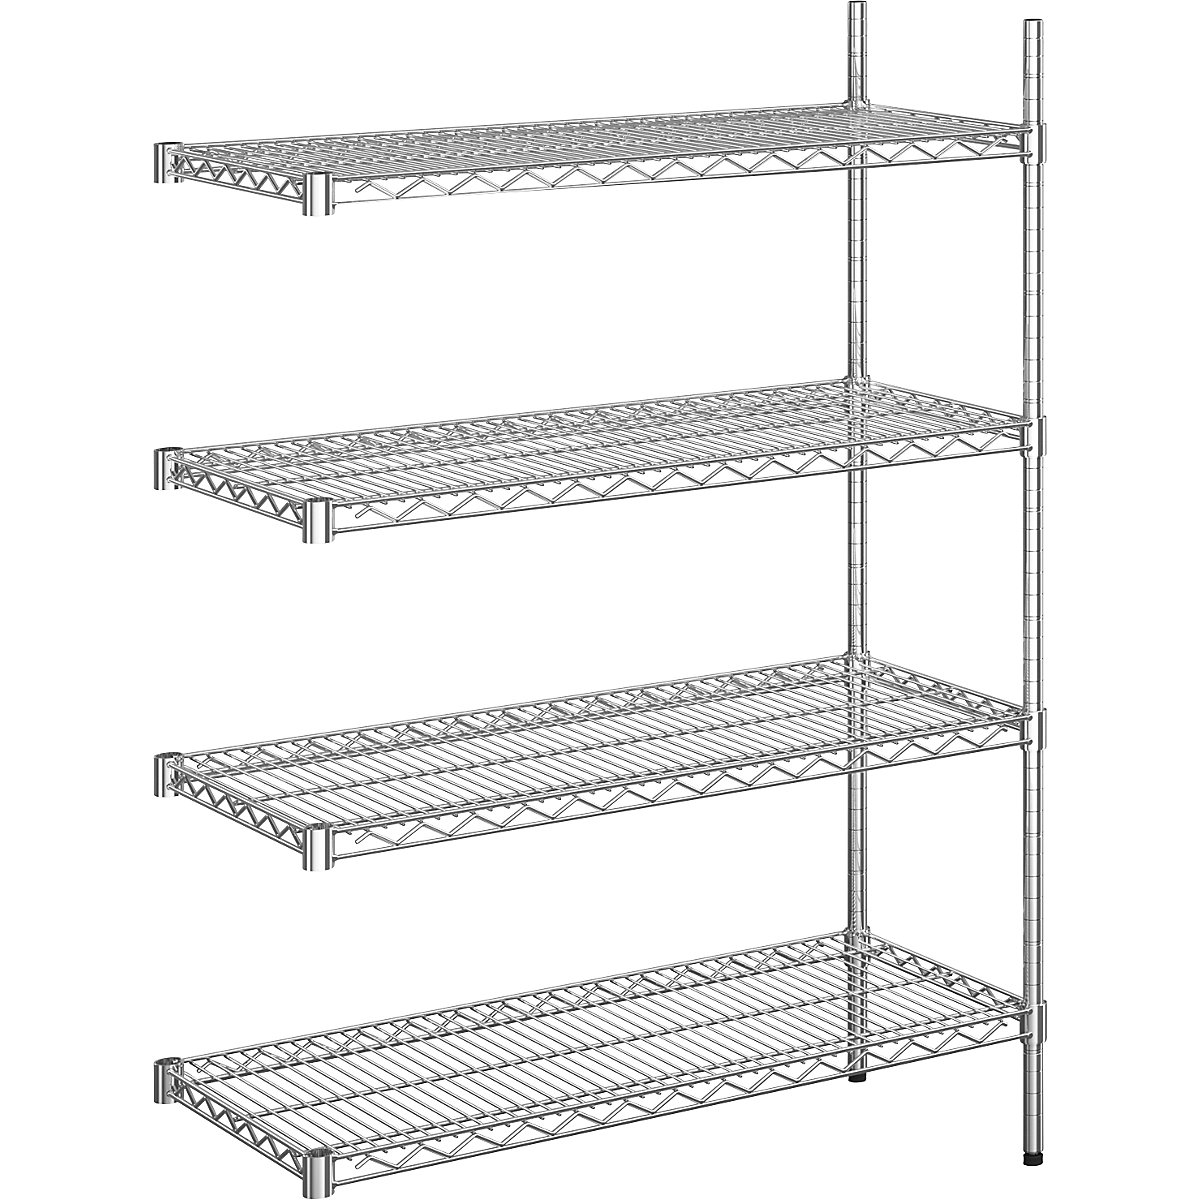 Steel wire mesh shelf unit, chrome plated